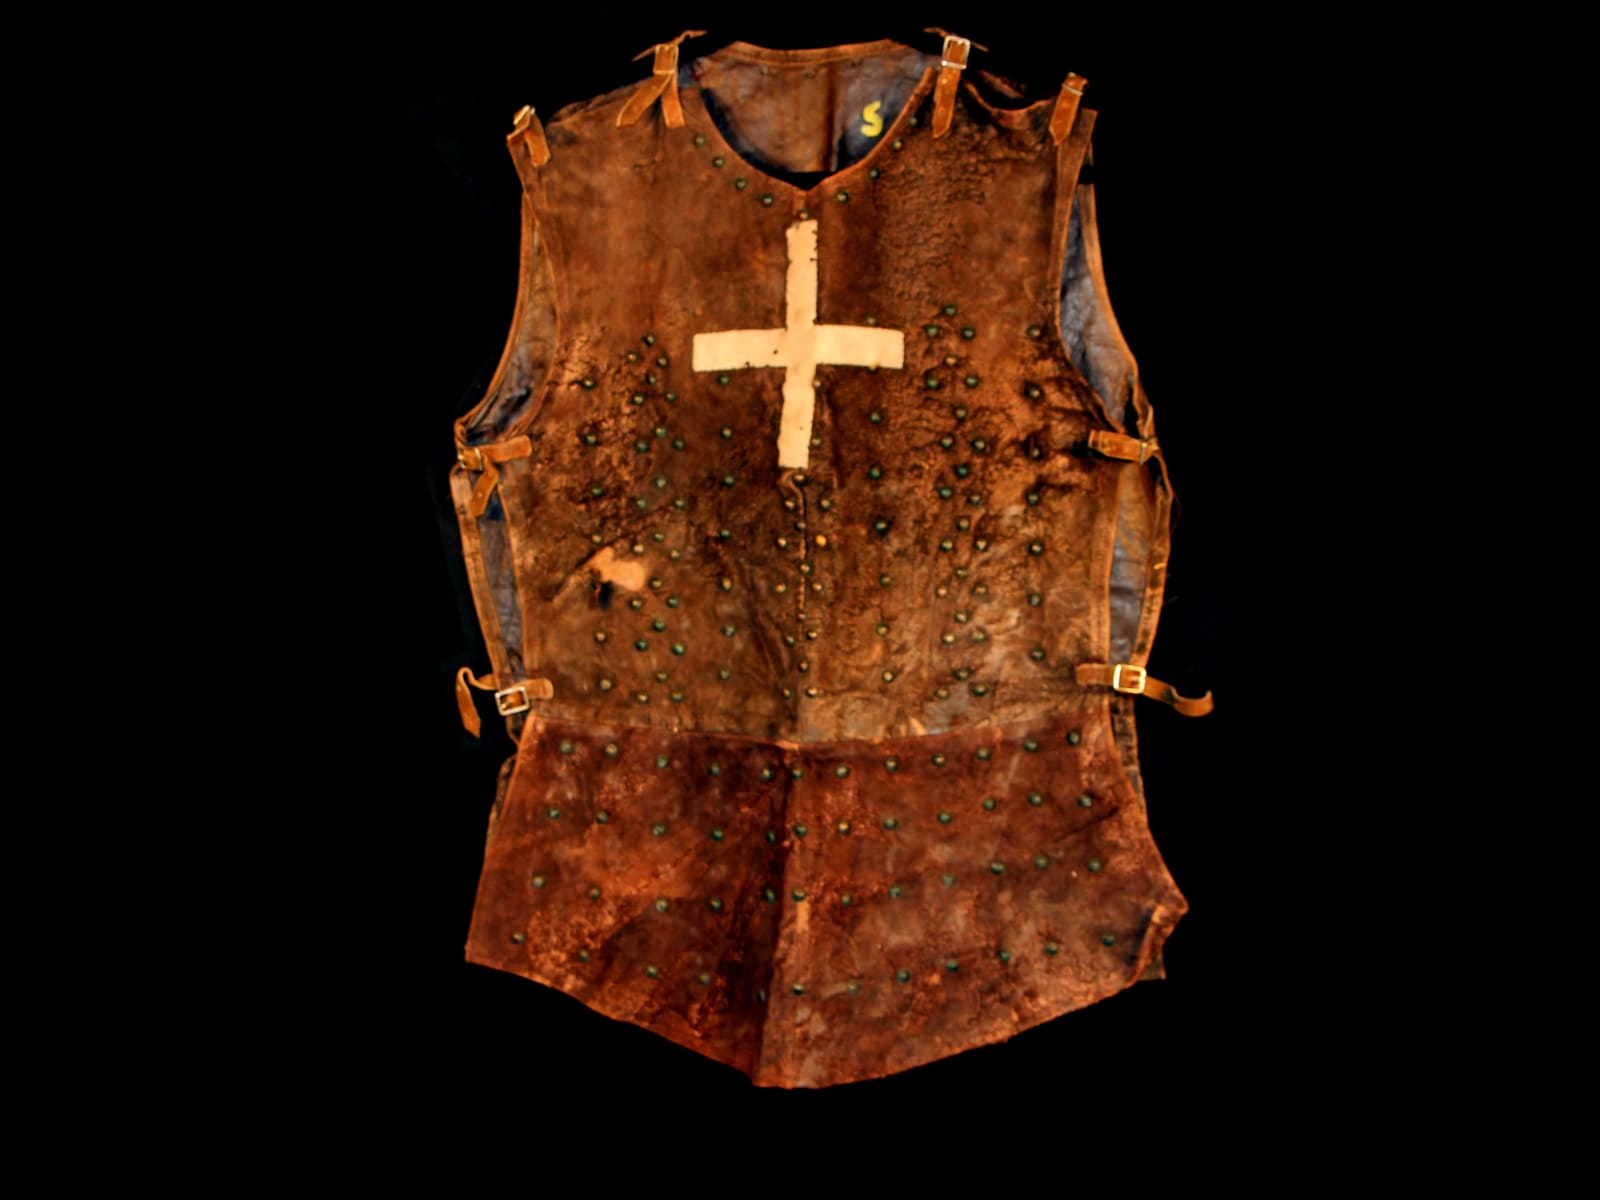 Dave Sharp Medieval Leather Vest at Santa Monica 2013 as S108 - Mecum ...